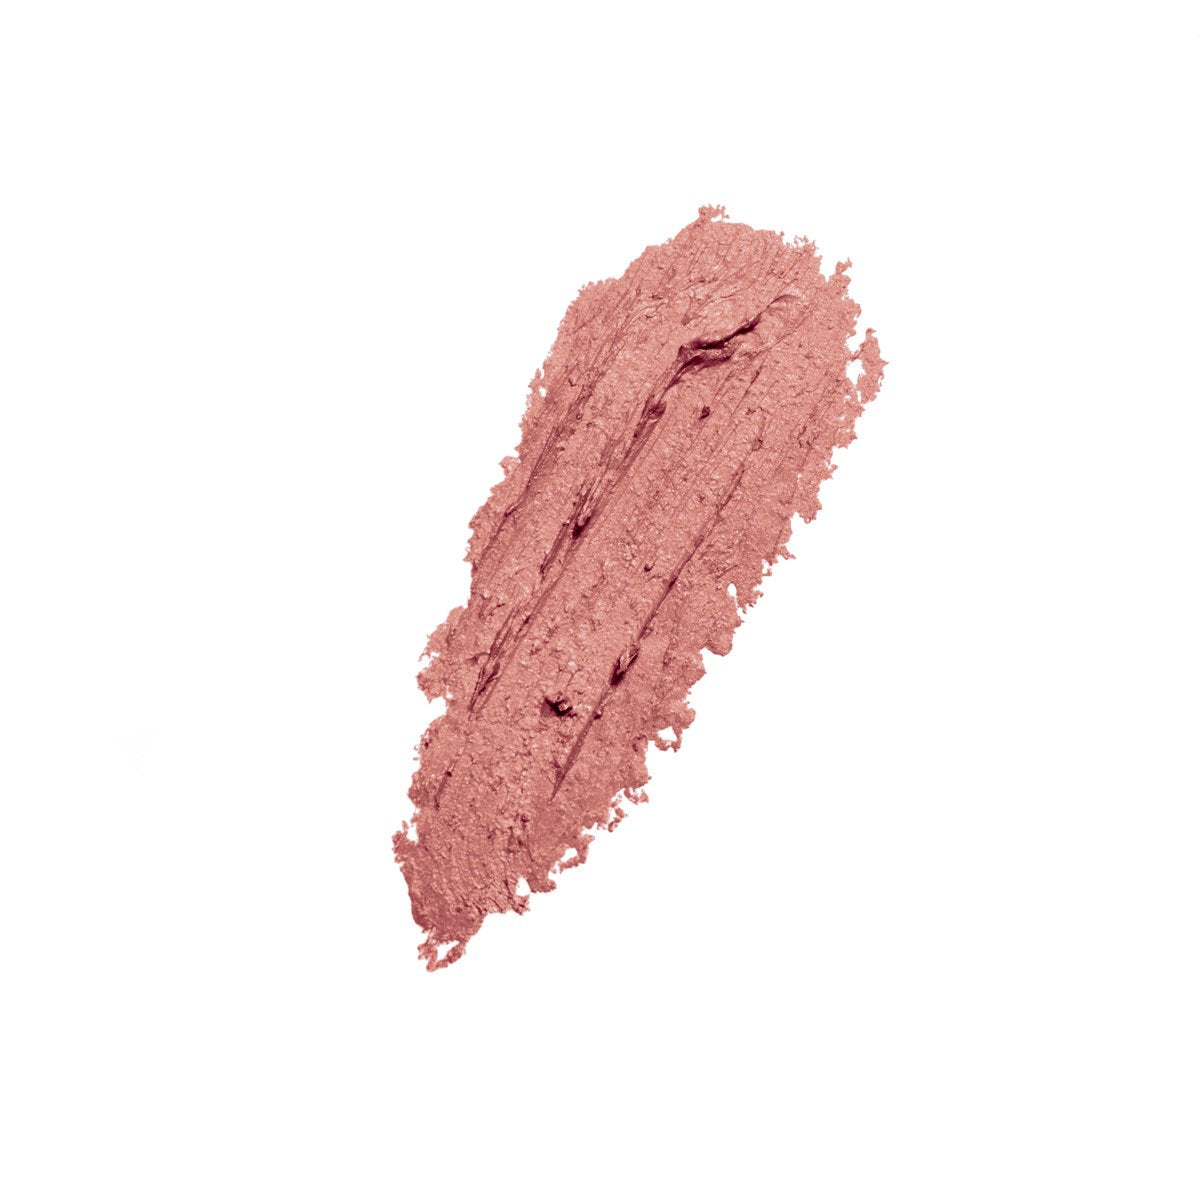 BIRTHDAY SUIT - Pinky Beige - pink beige long-wearing matte lipstick